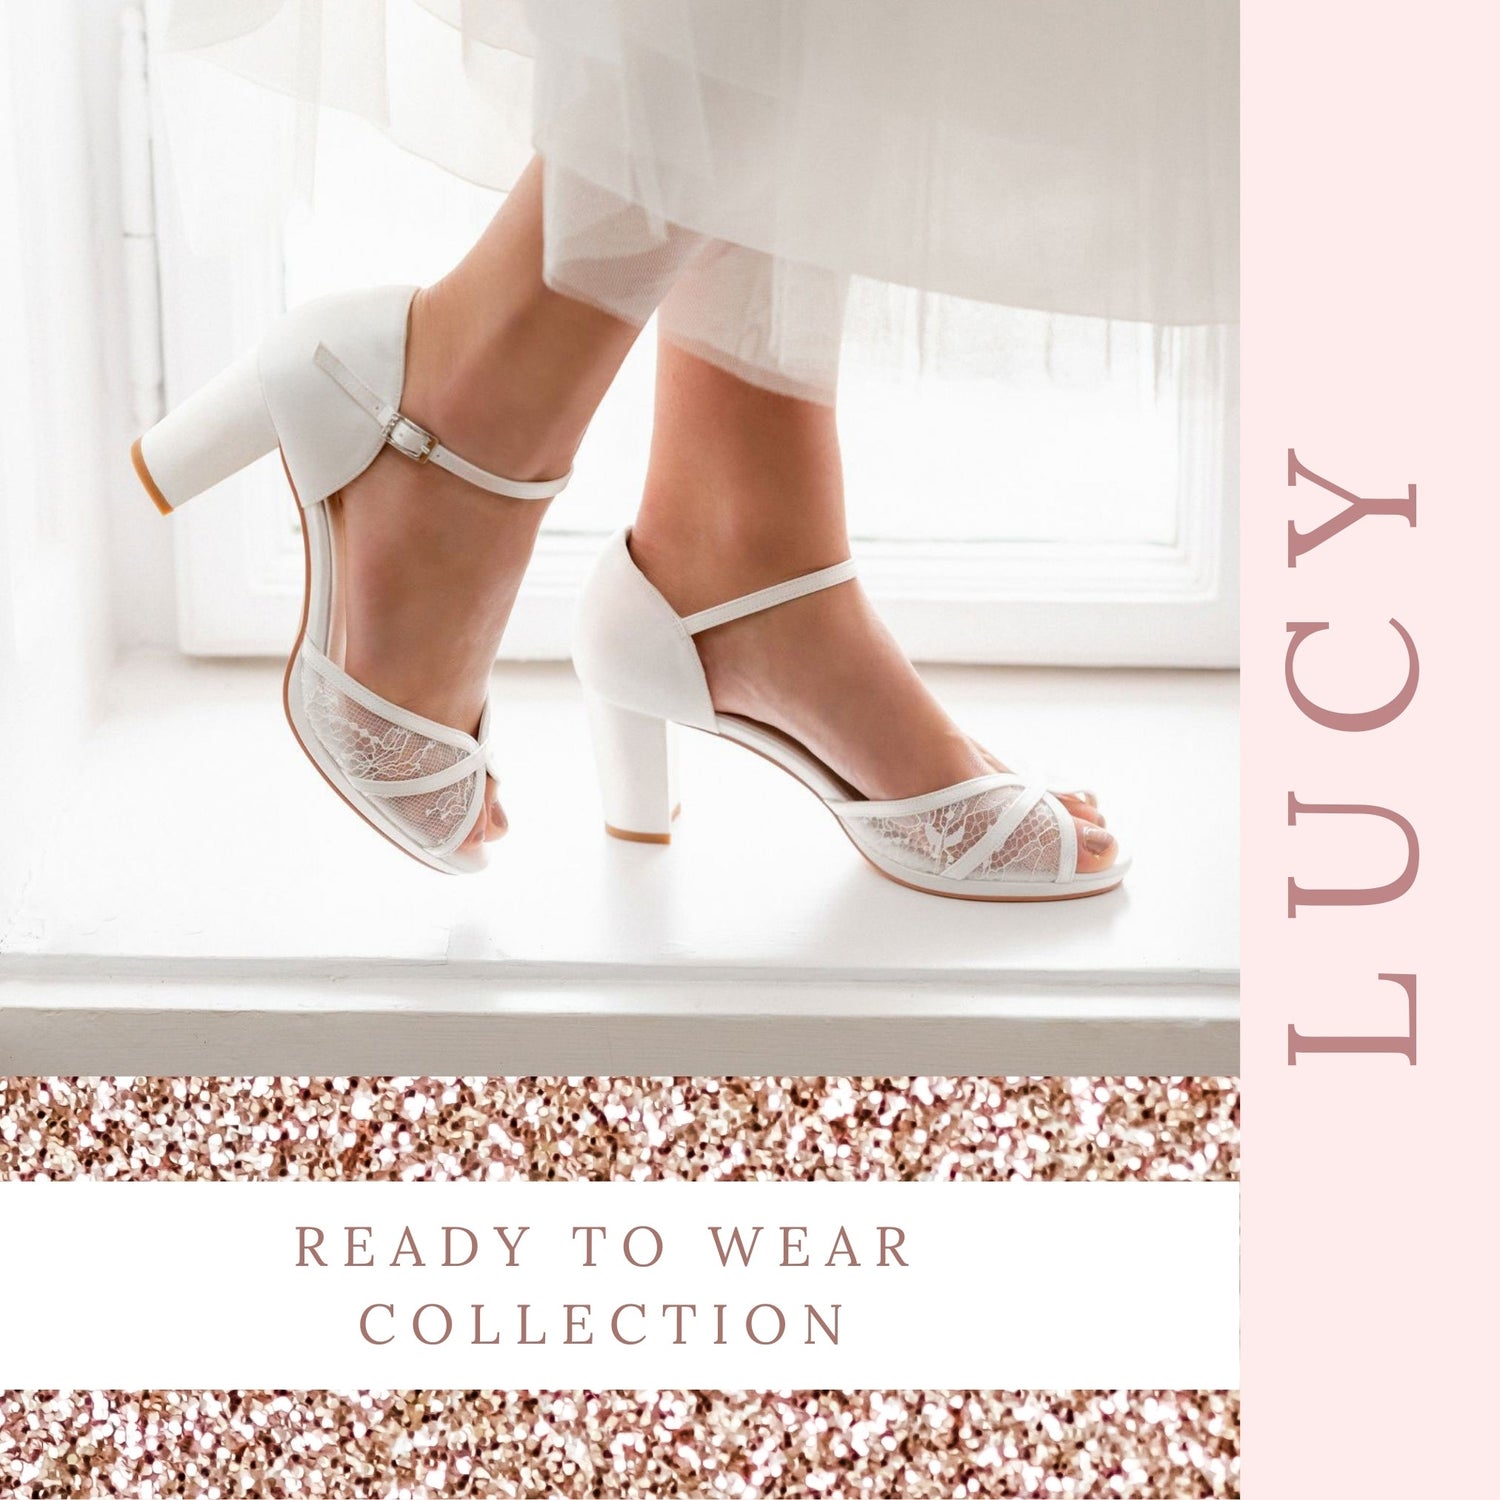 17 Comfortable Wedding Shoes for Brides, Bridesmaids, Guests